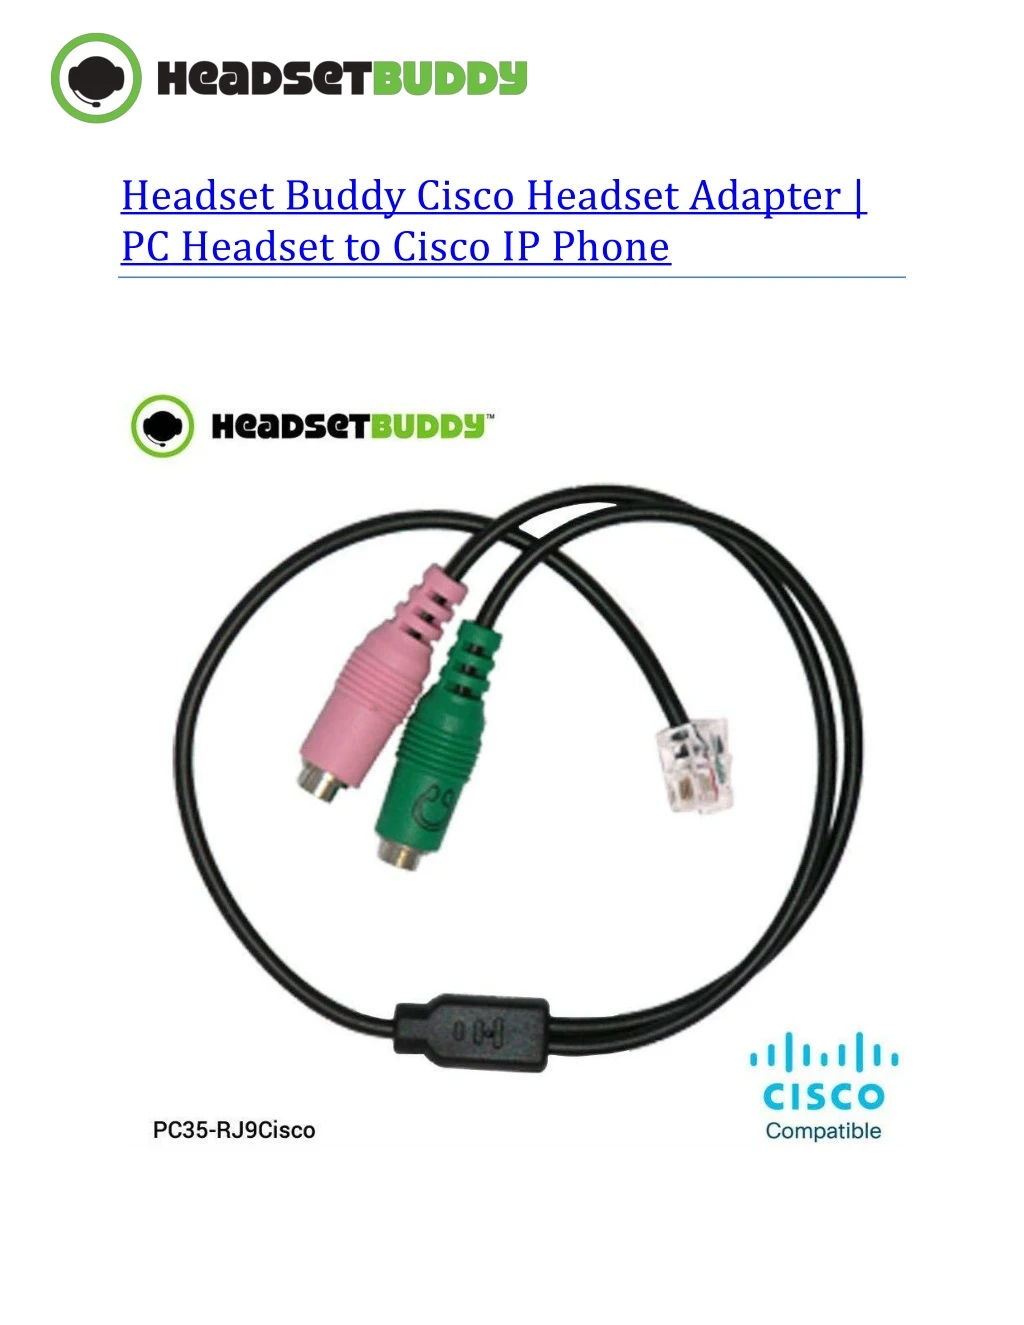 headset buddy cisco headset adapter pc headset